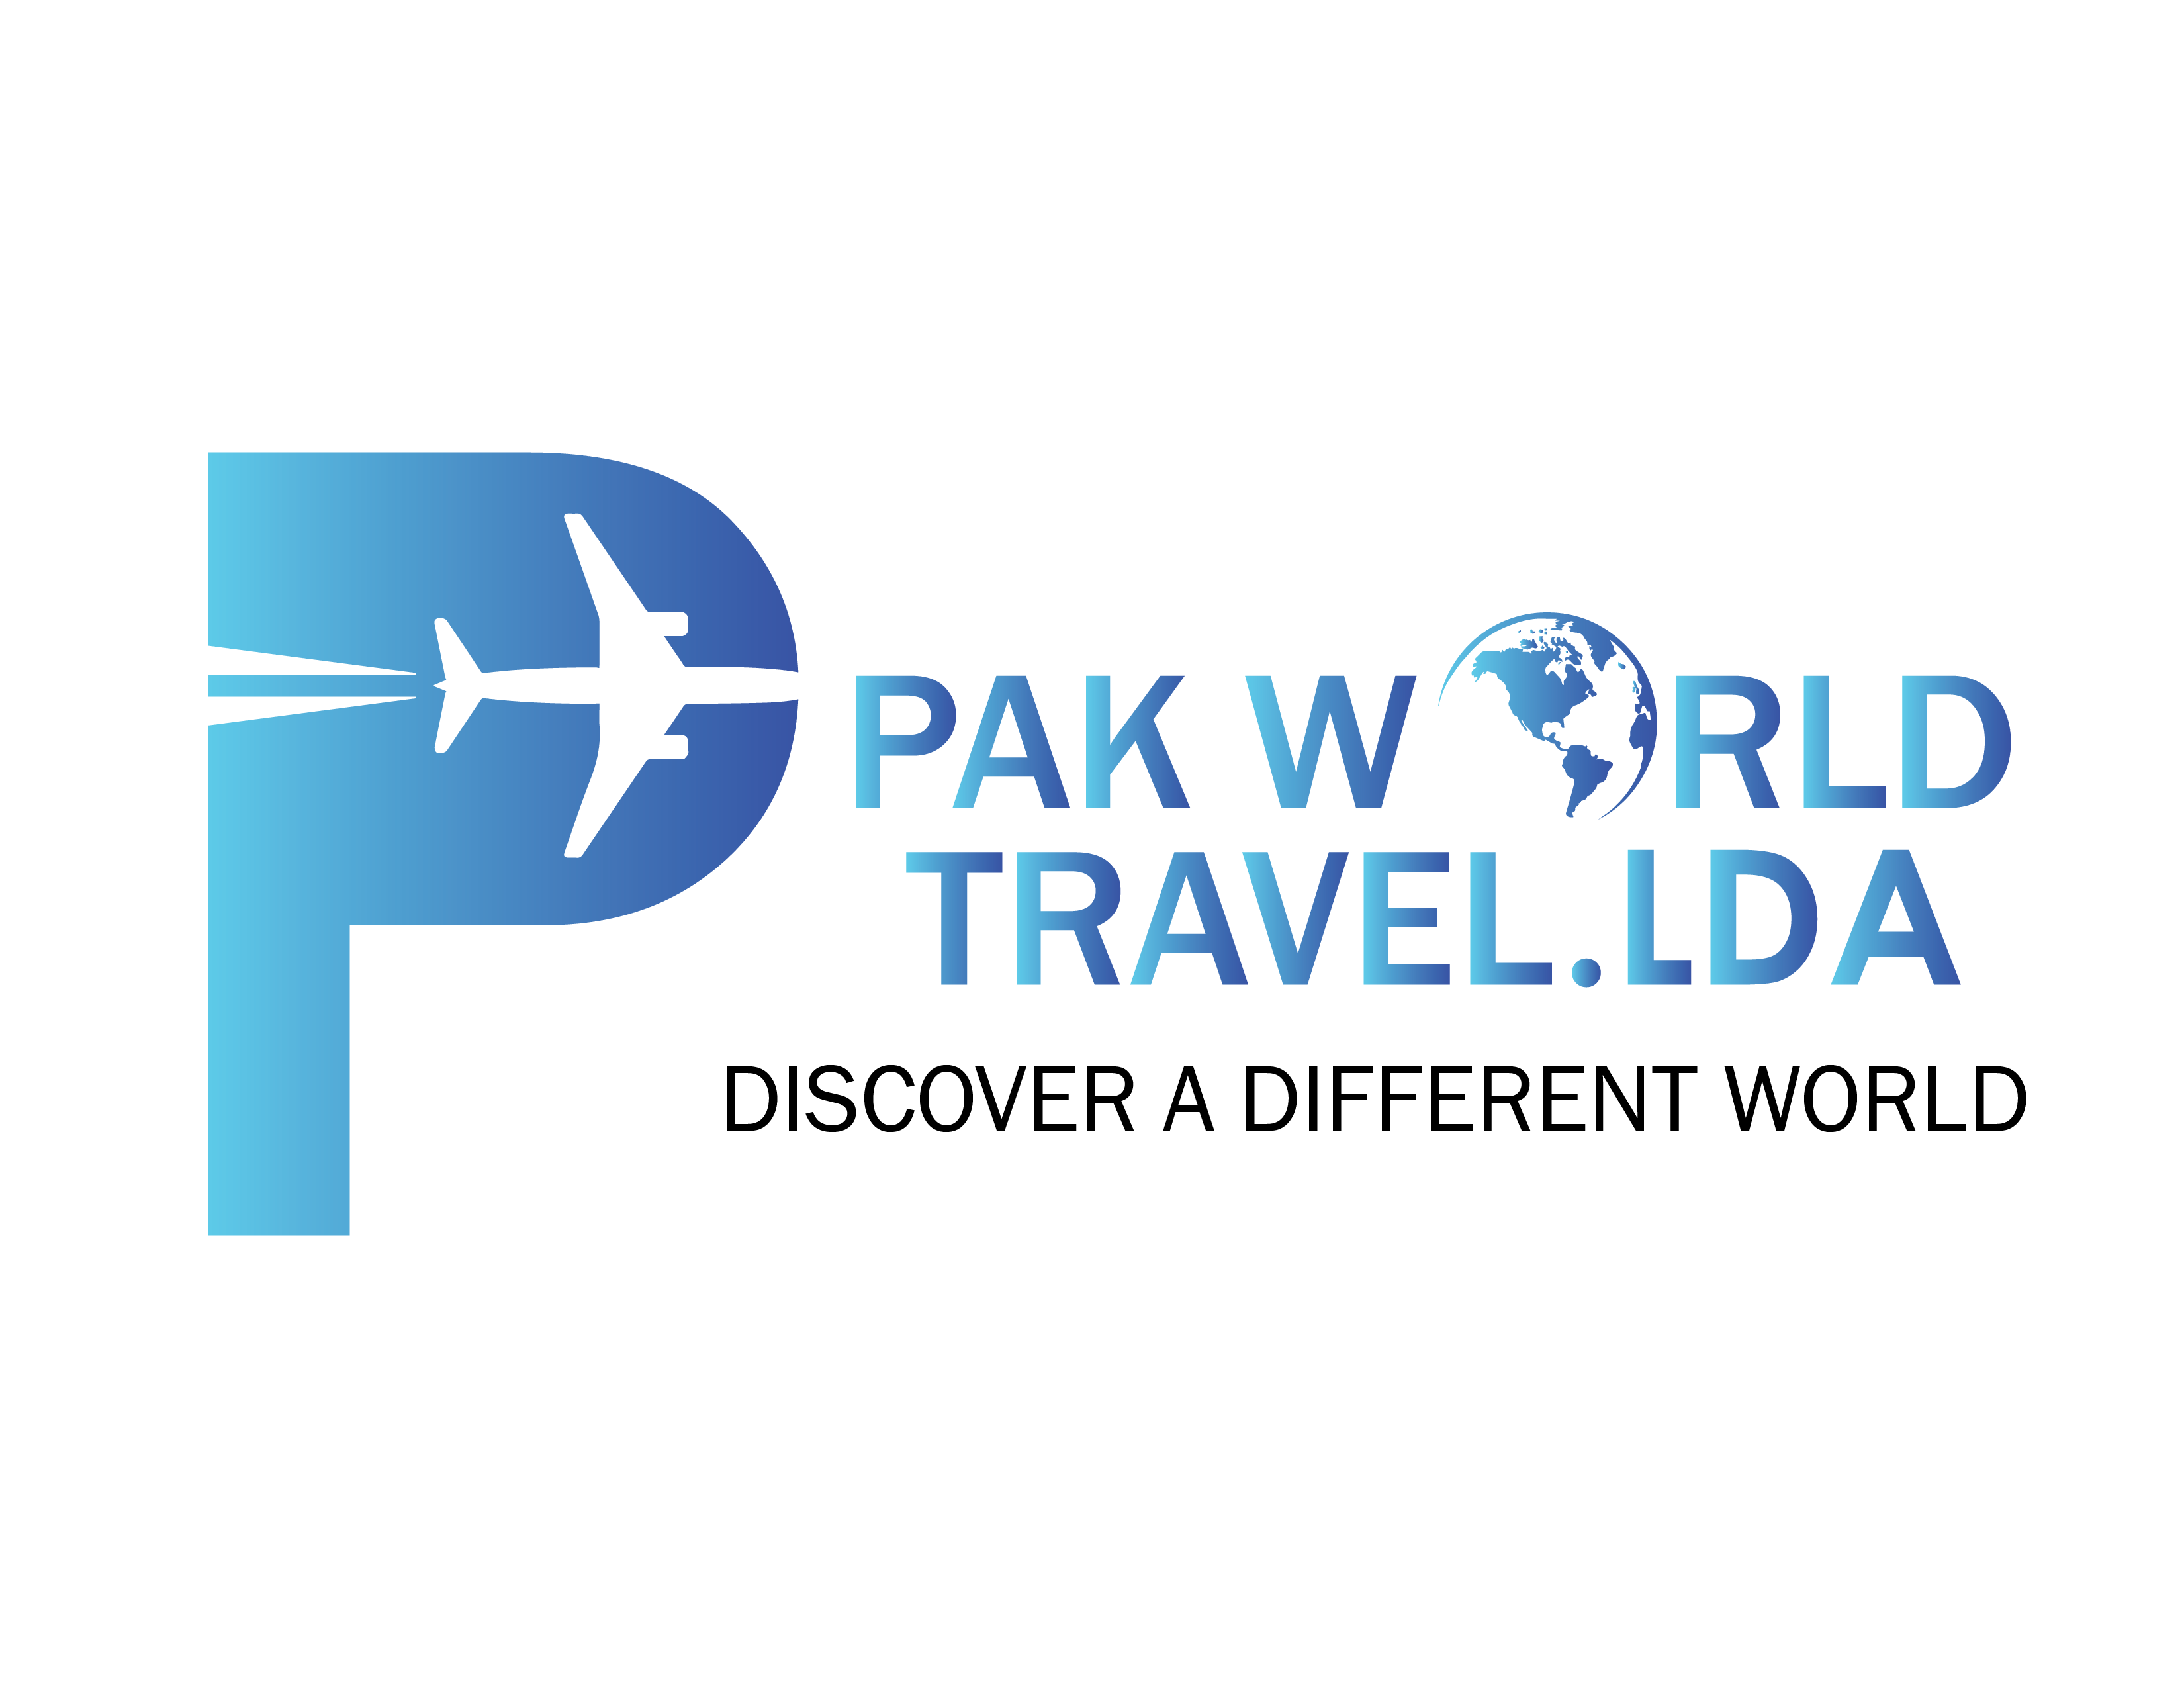 Pak World Travel